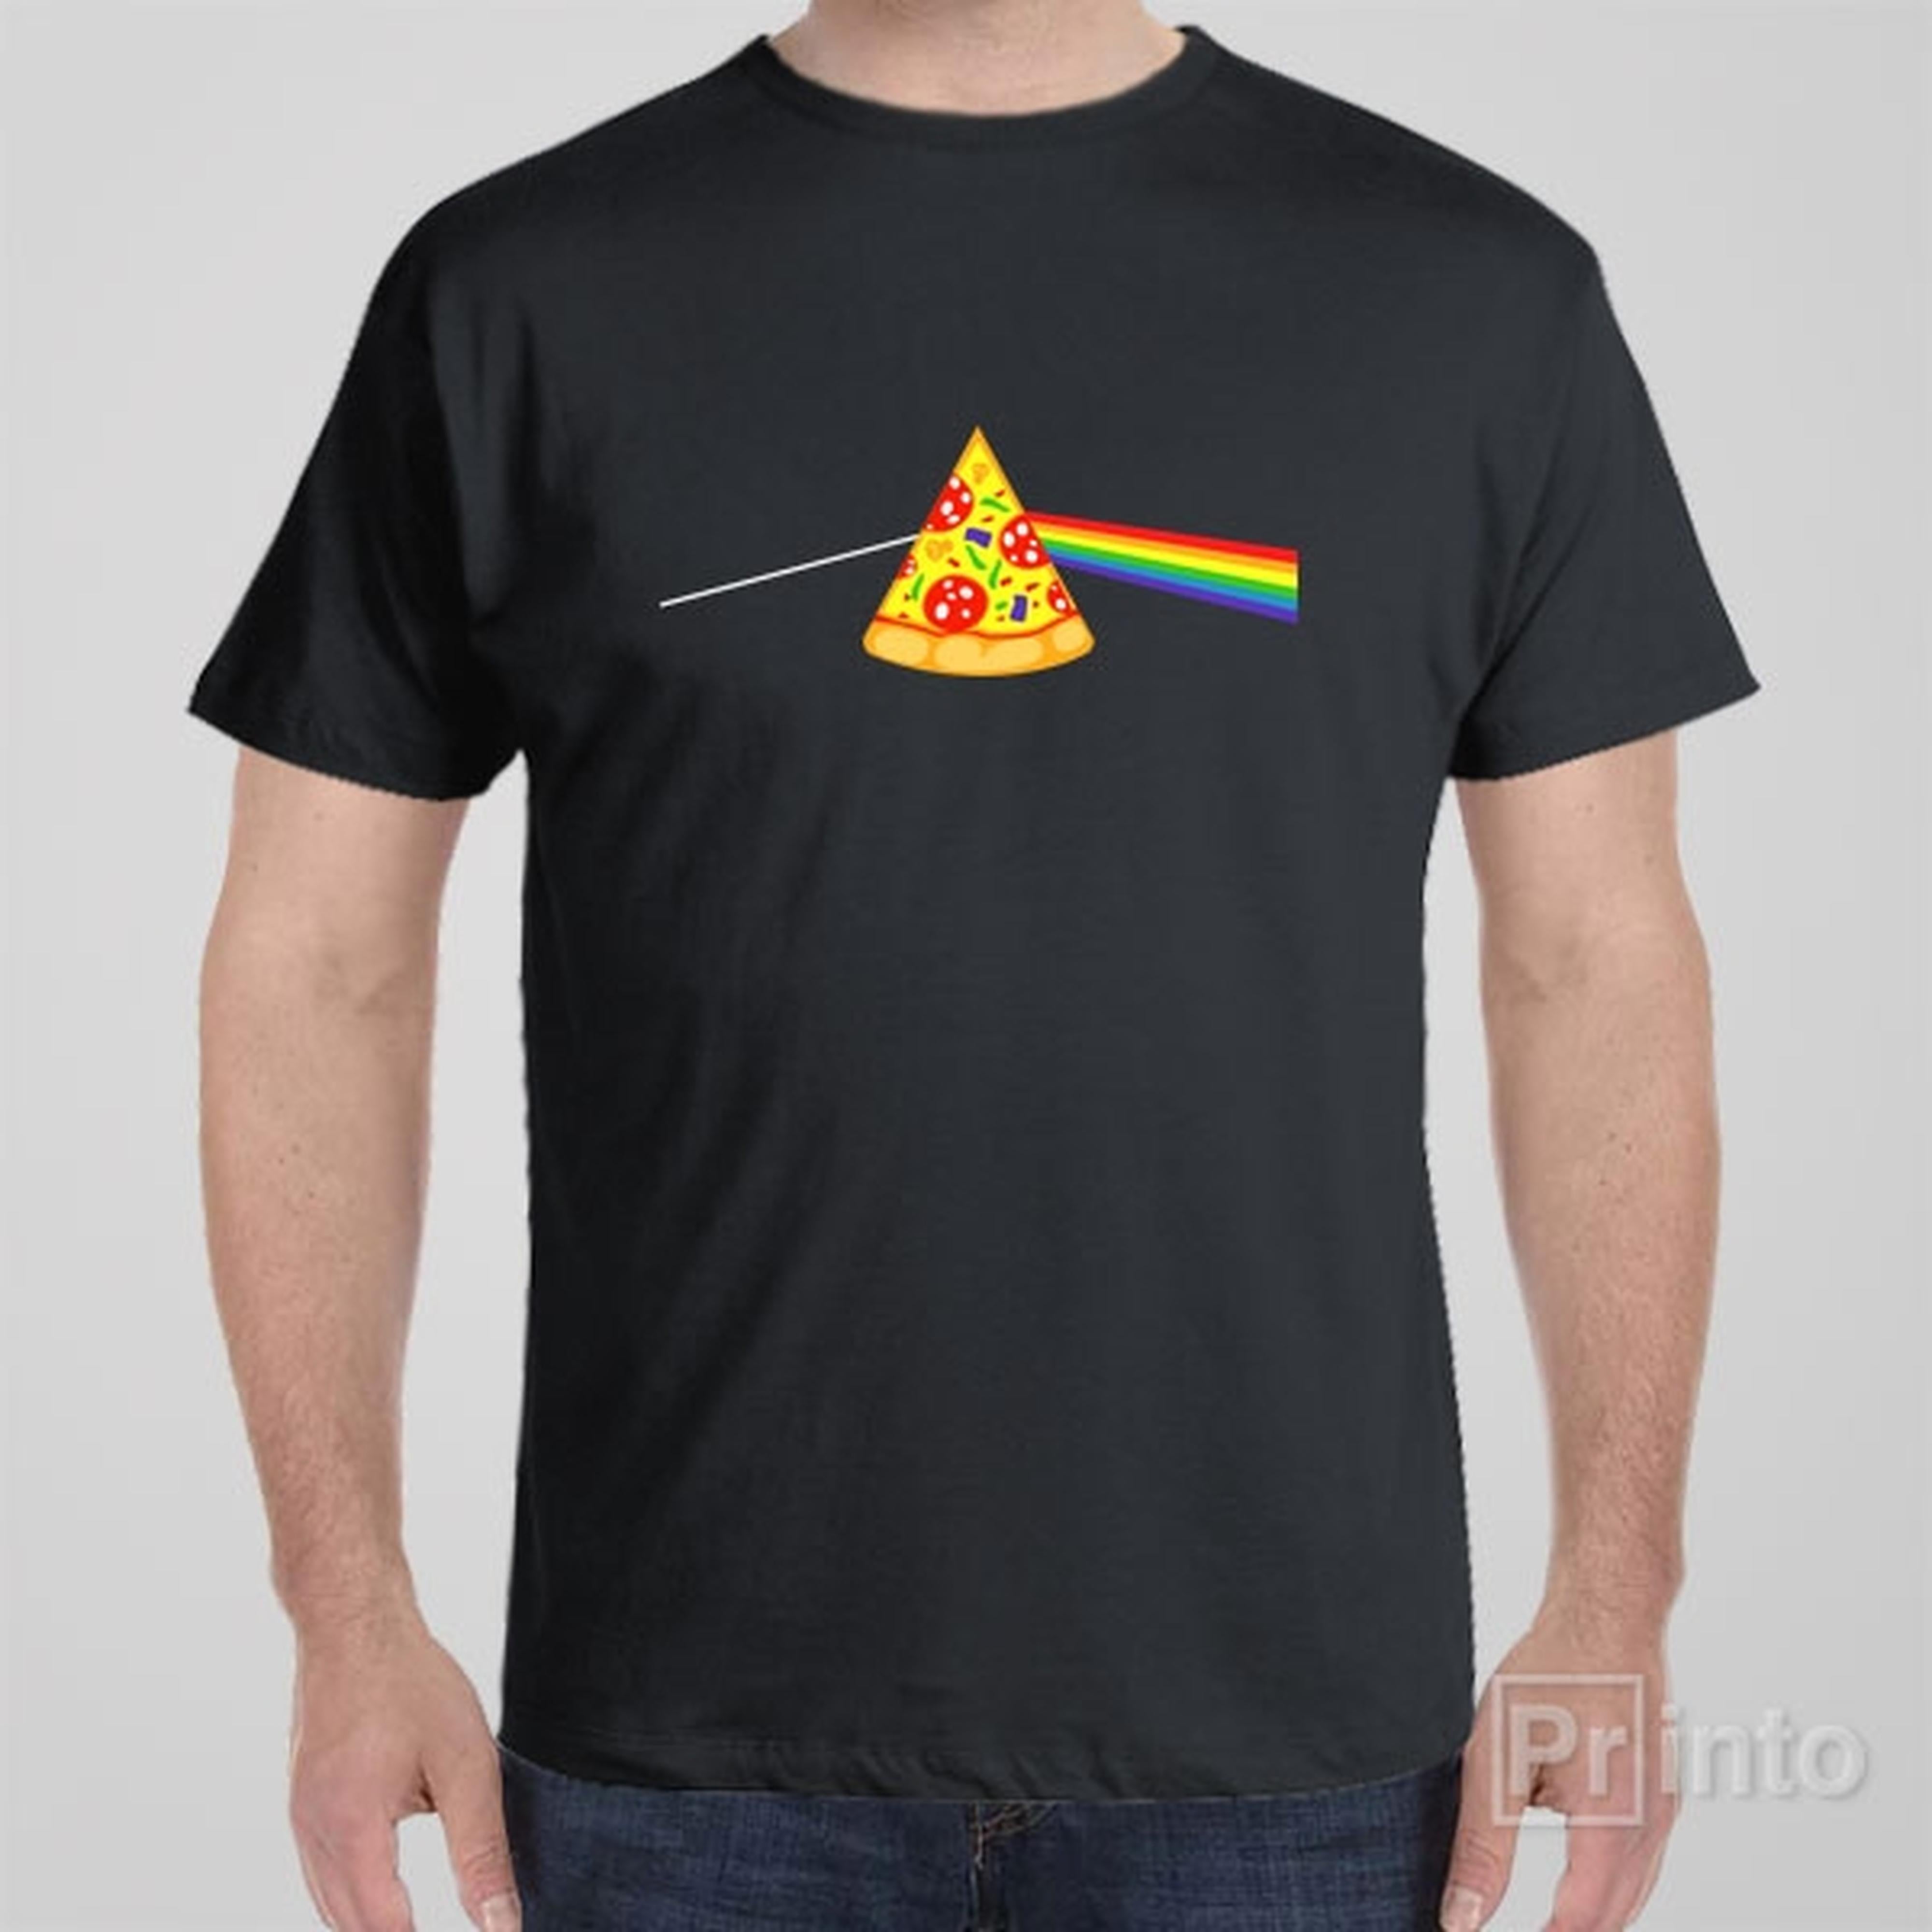 prisma-pizza-t-shirt